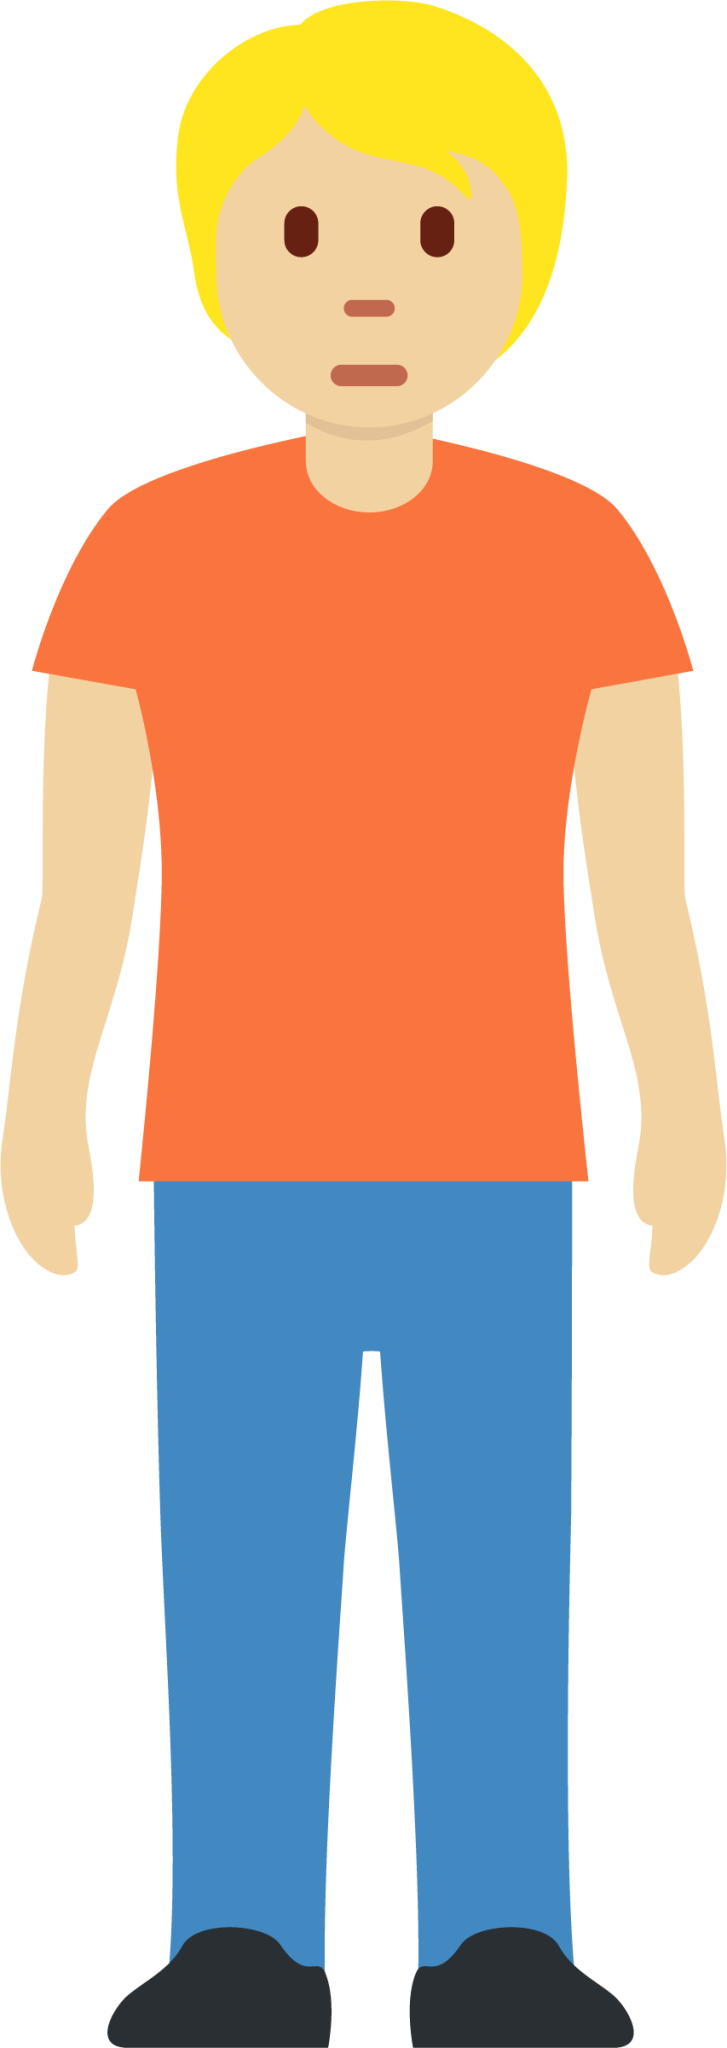 person standing: medium-light skin tone emoji